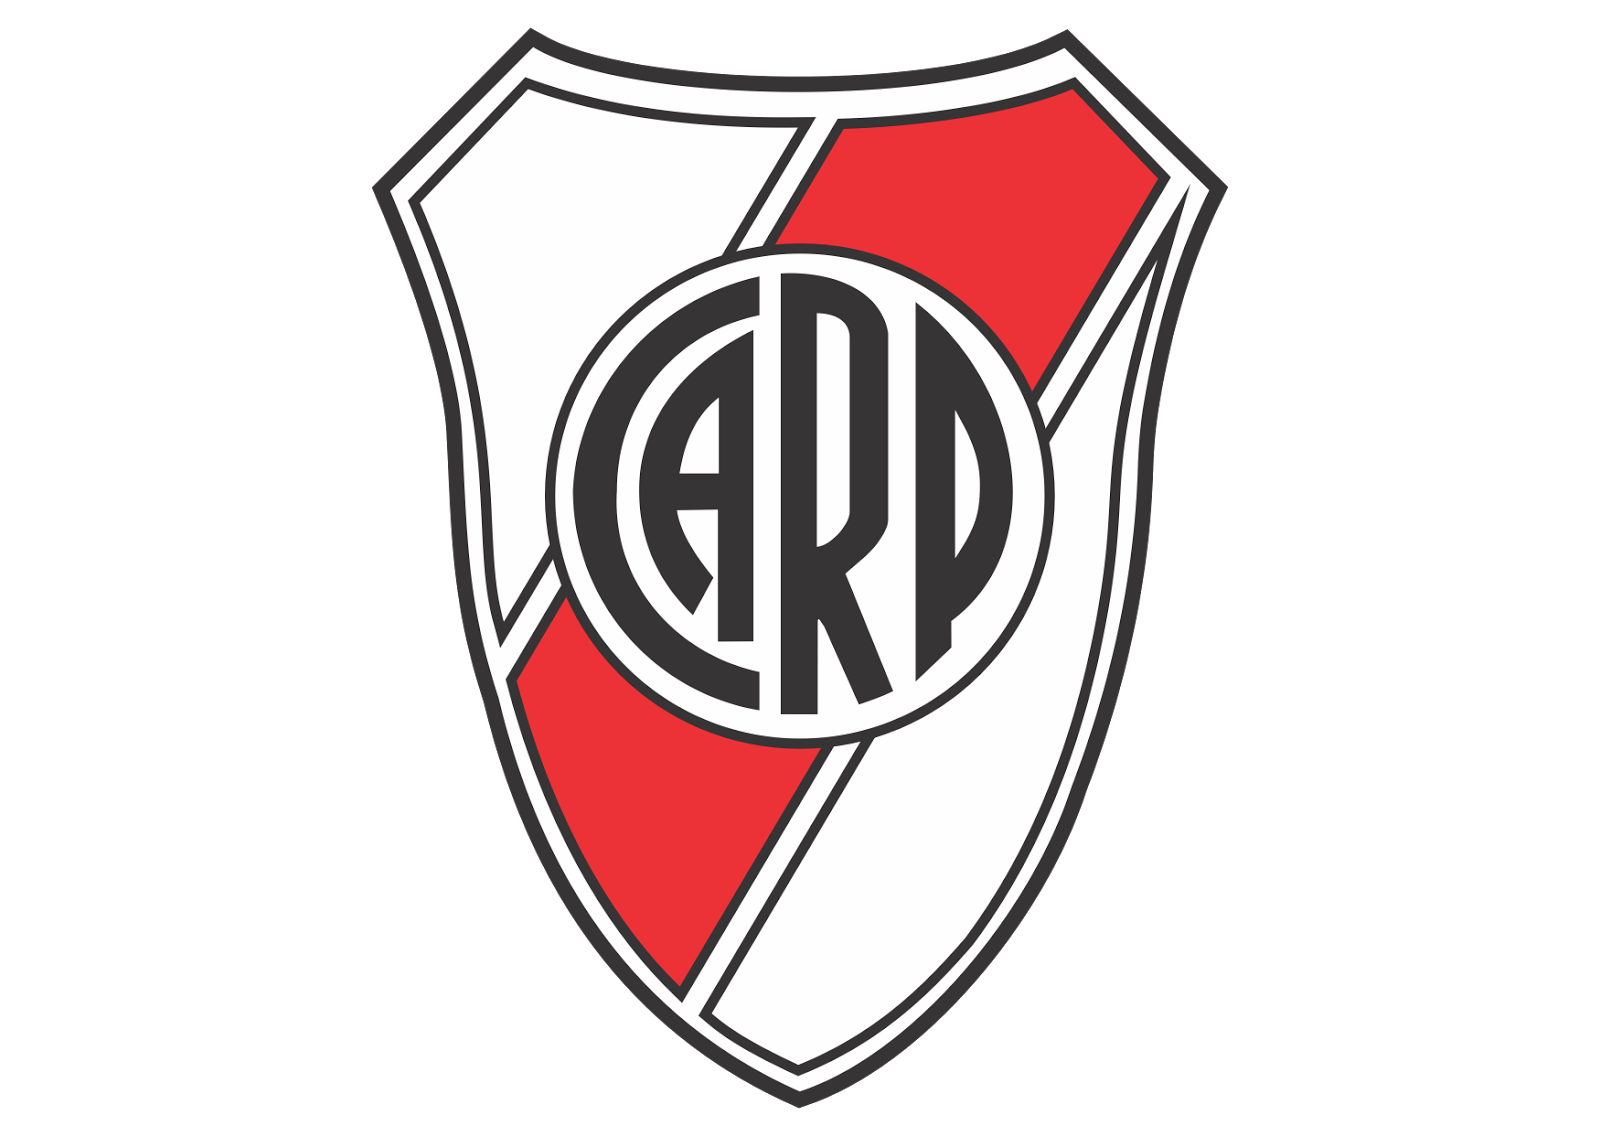 River Plate escudo Logo Vector ~ Format Cdr, Ai, Eps, Svg, PDF, PNG